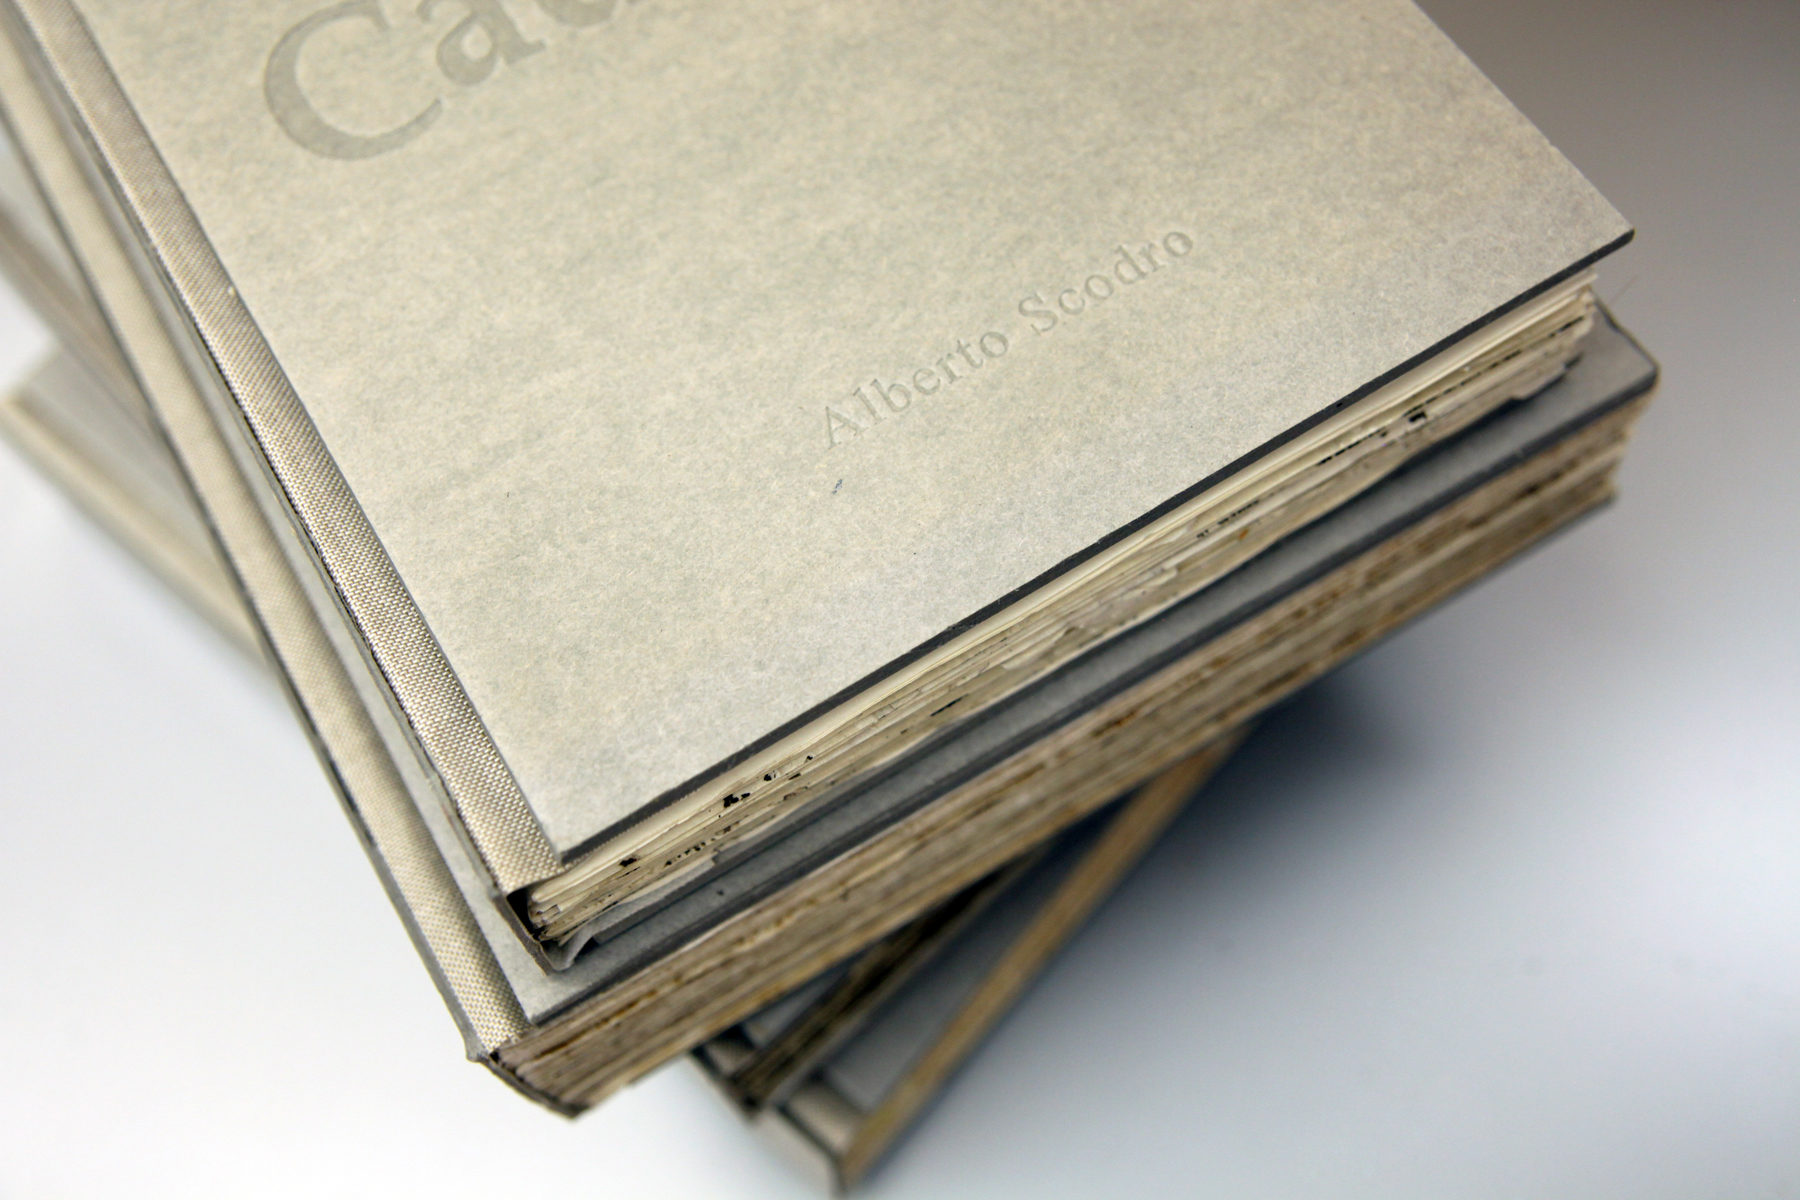 A. Scodro, Caduceo, 2009-2015, paper, wax, floor imprint, paperback, variable dimensions, four pieces